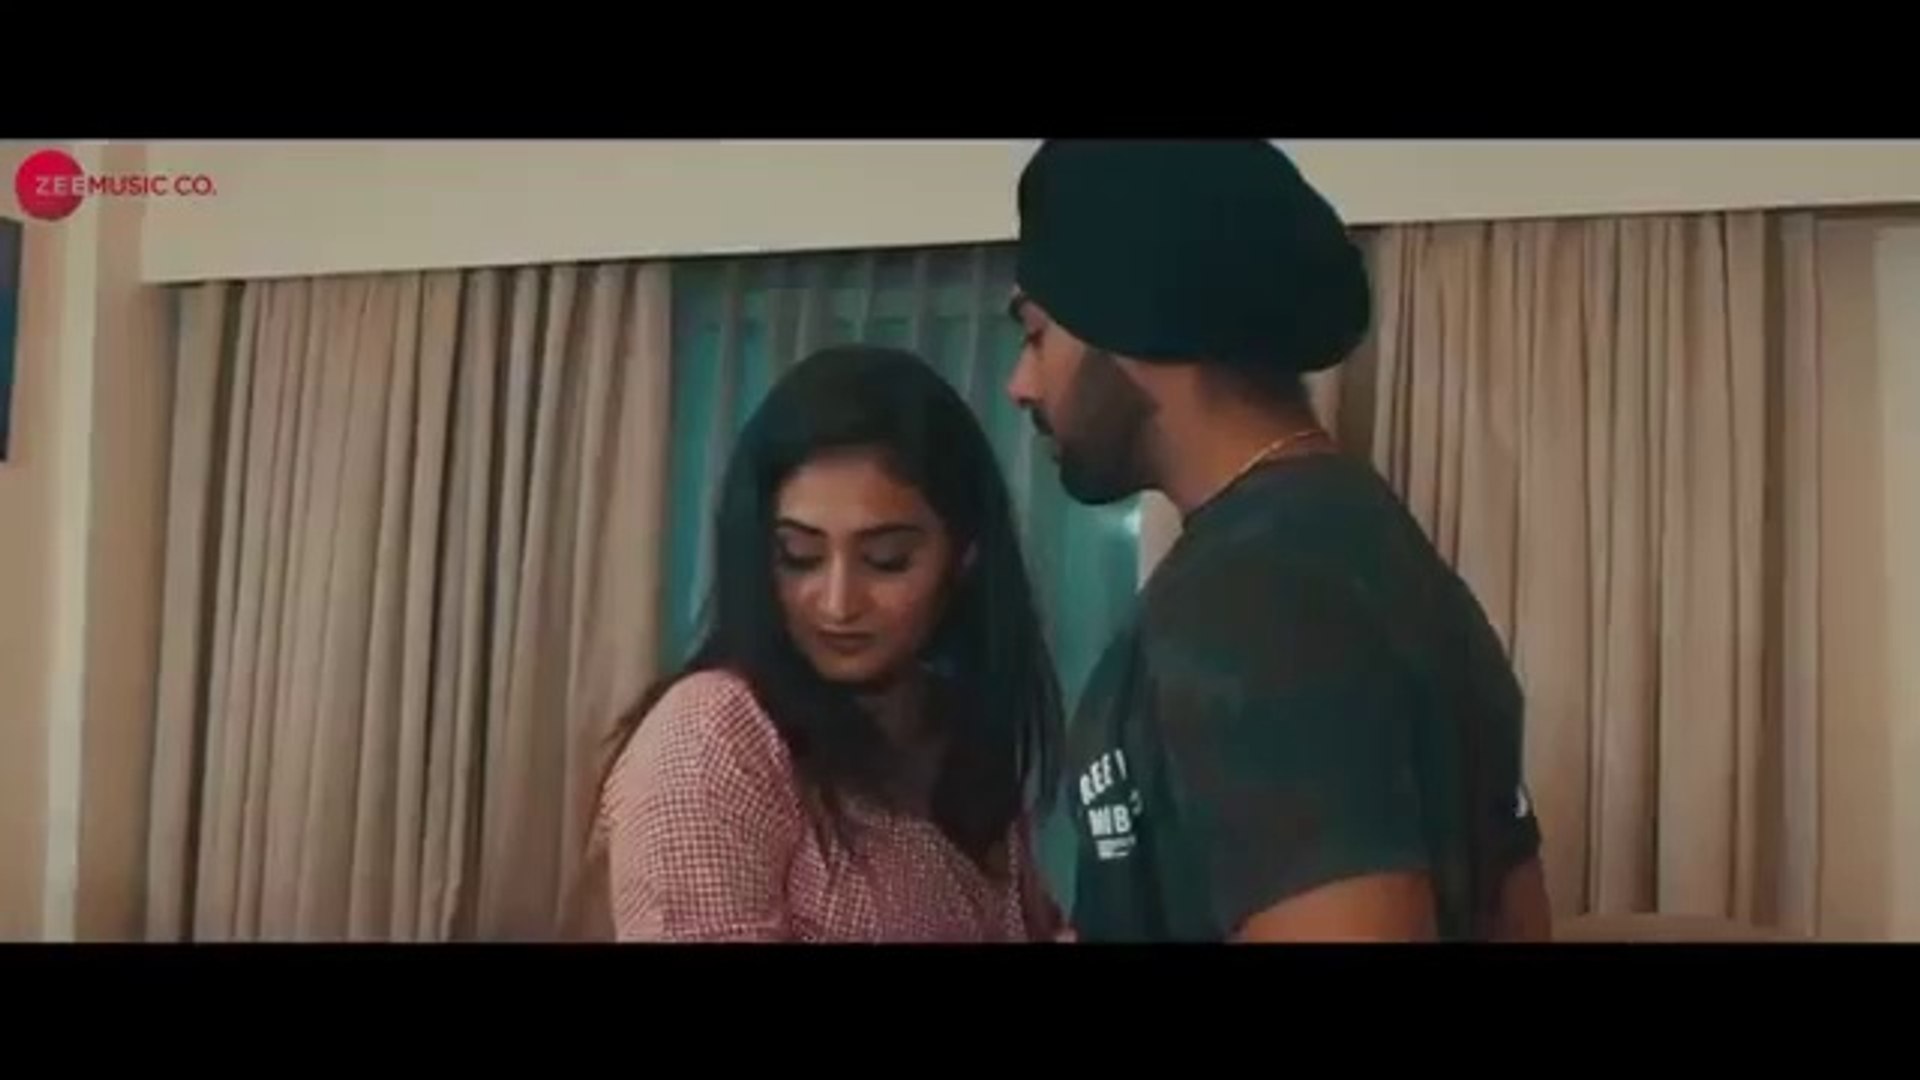 || Parwah - Official Music Video - Jais Wasir ft. – New Punjabi songs 2019||